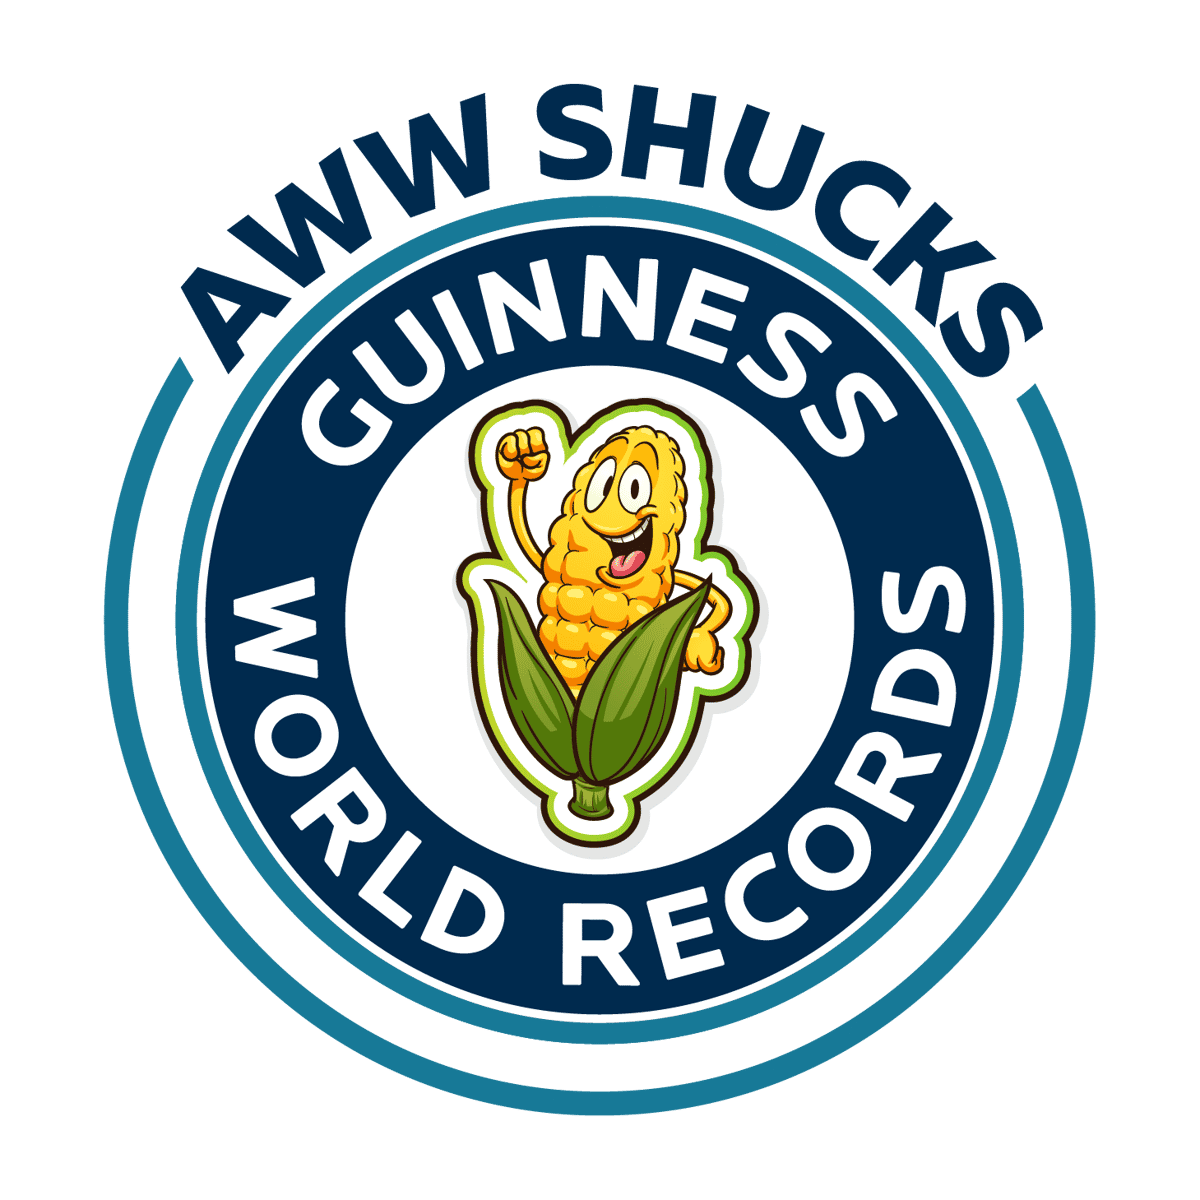 guinness world record aww shucks logo